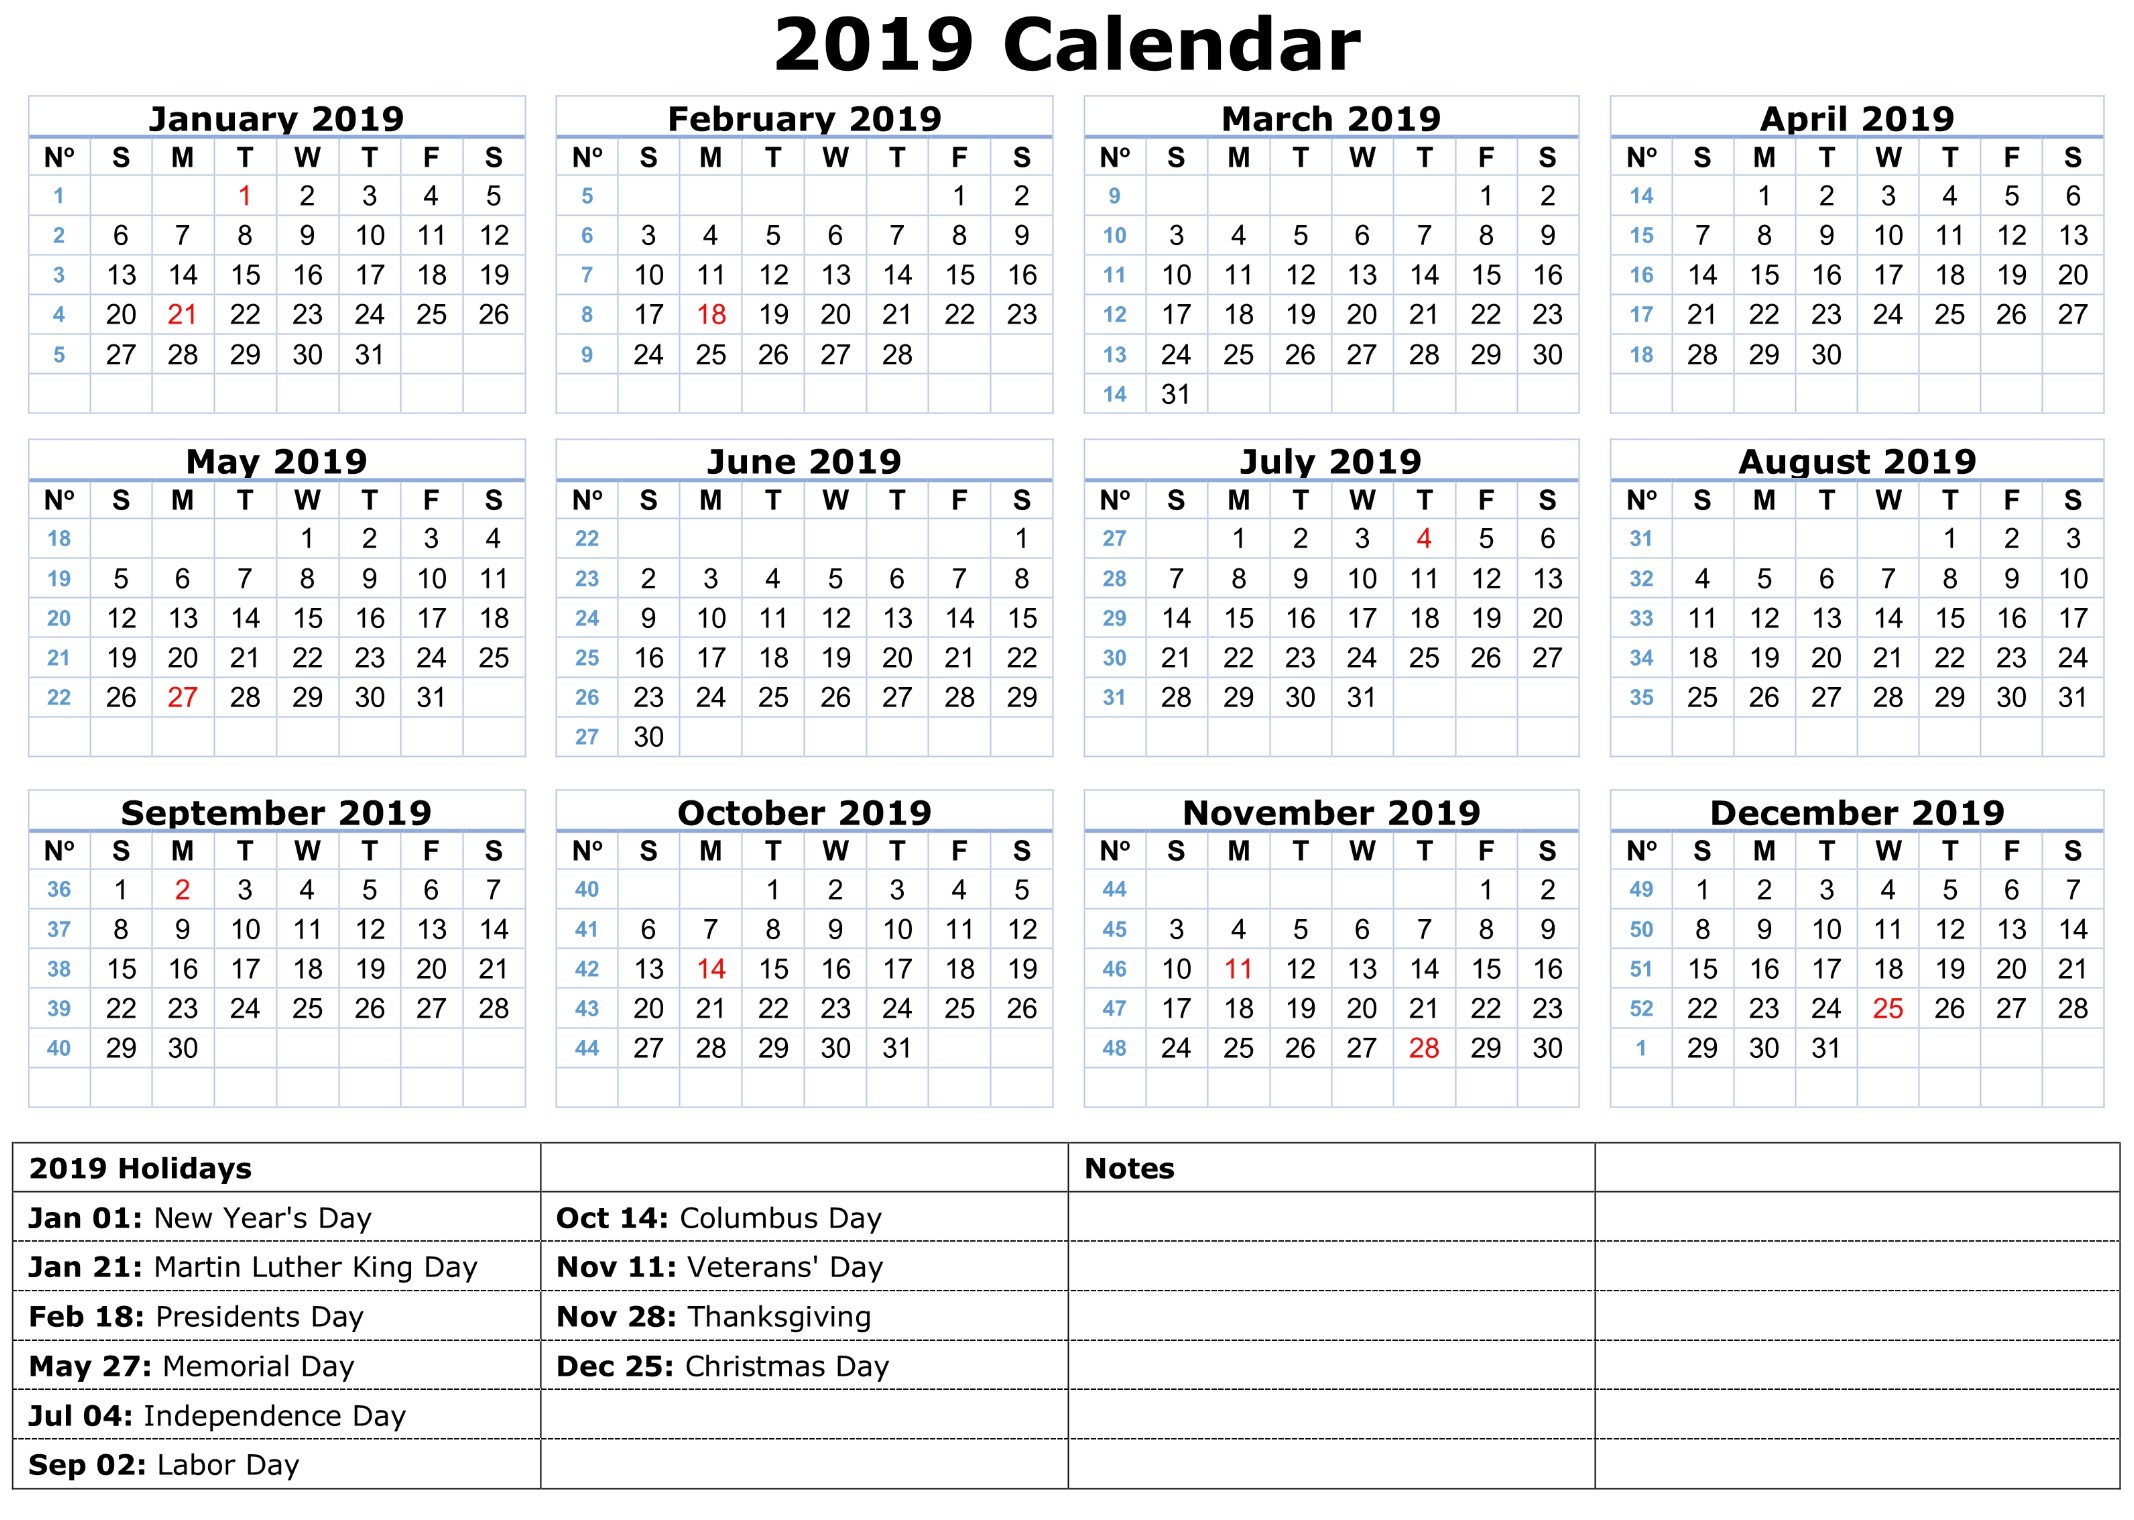 2019 Calendar AmazonAWS